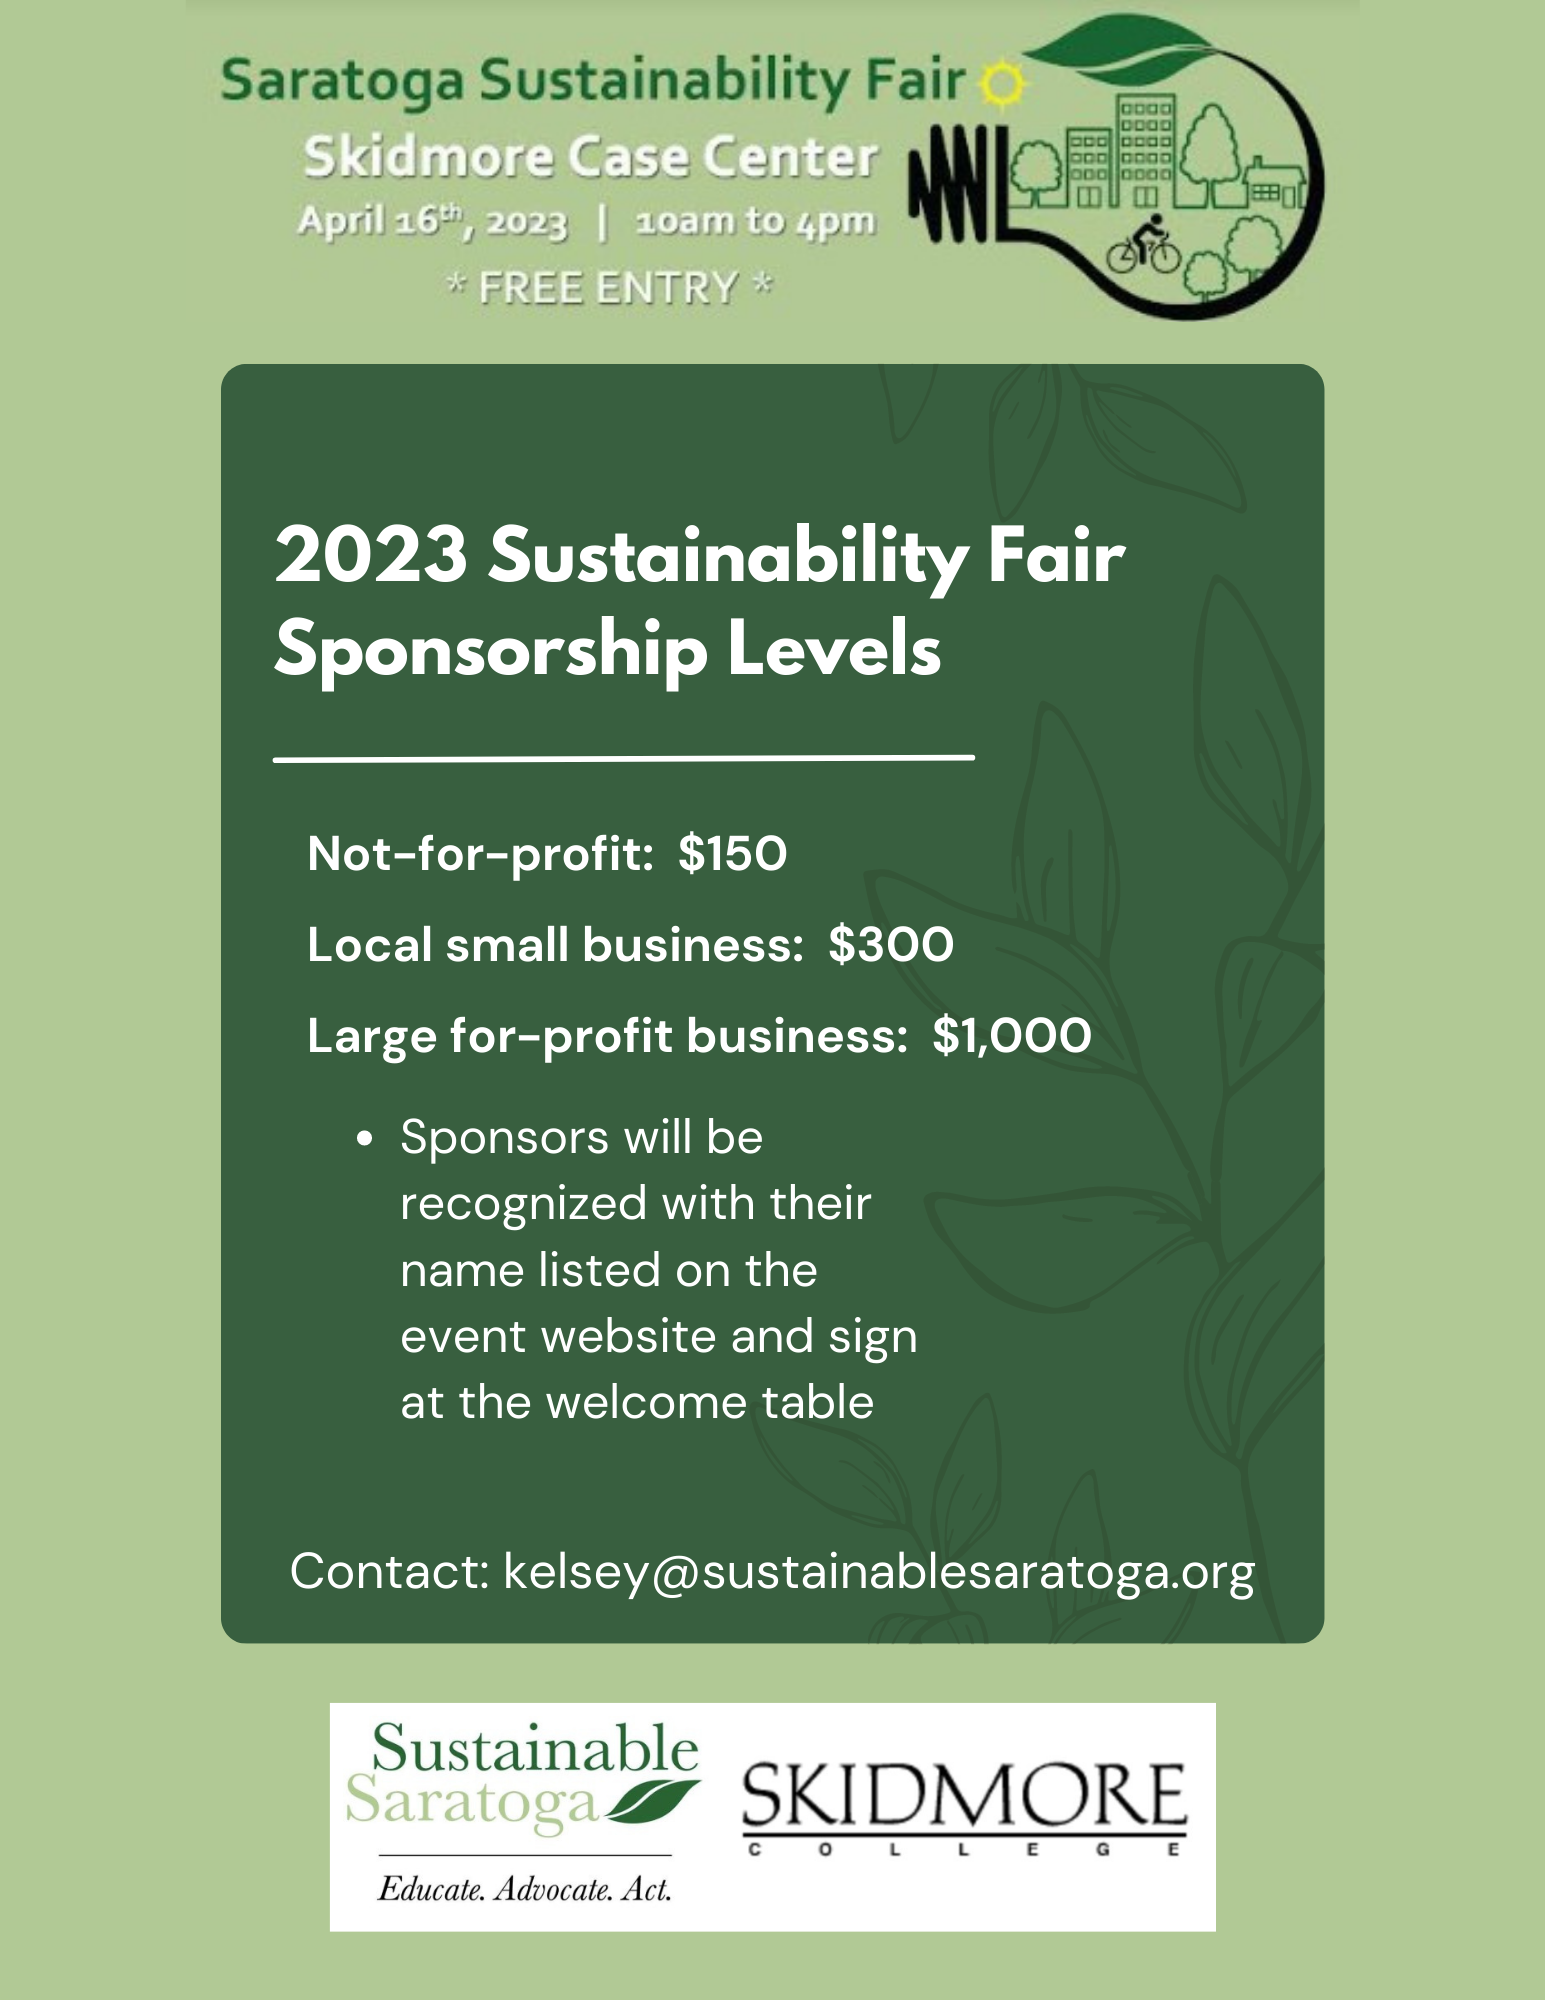 non for profits pay $150, local small biz $300, large biz $1000. Email kelsey@sustainablesaratoga.org